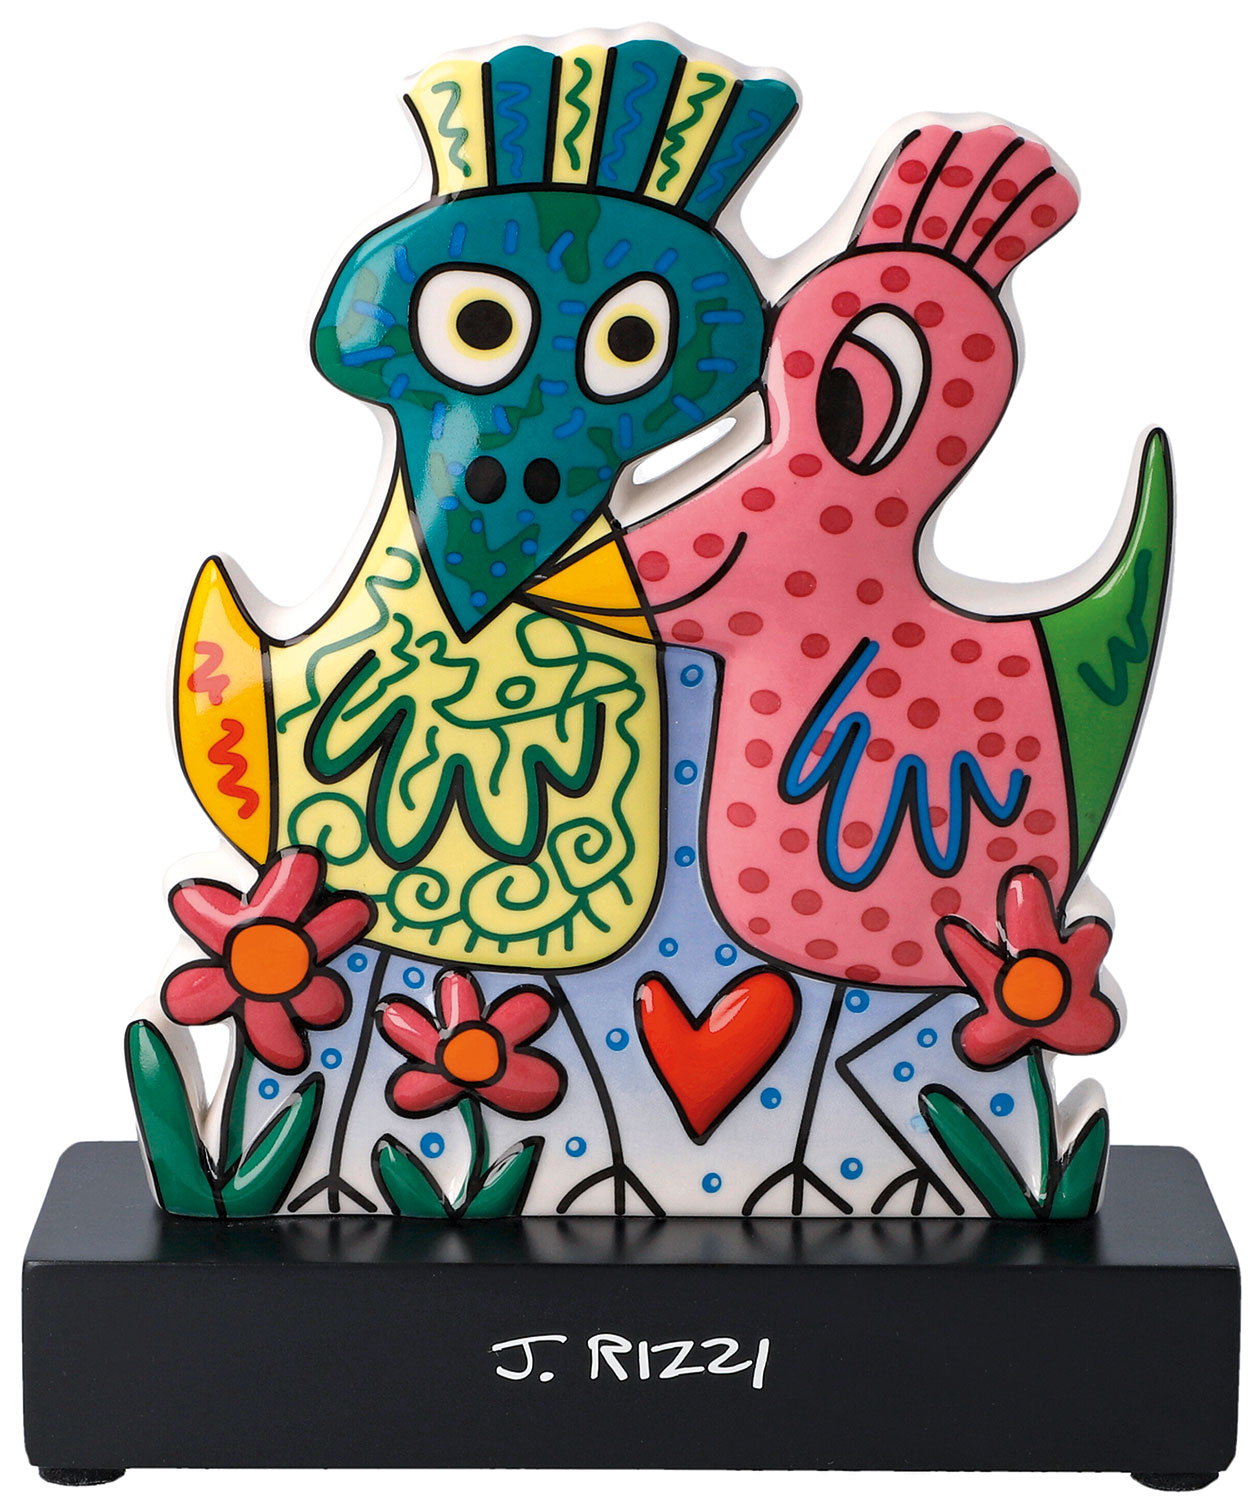 Porcelain Object "Love Birds" by James Rizzi